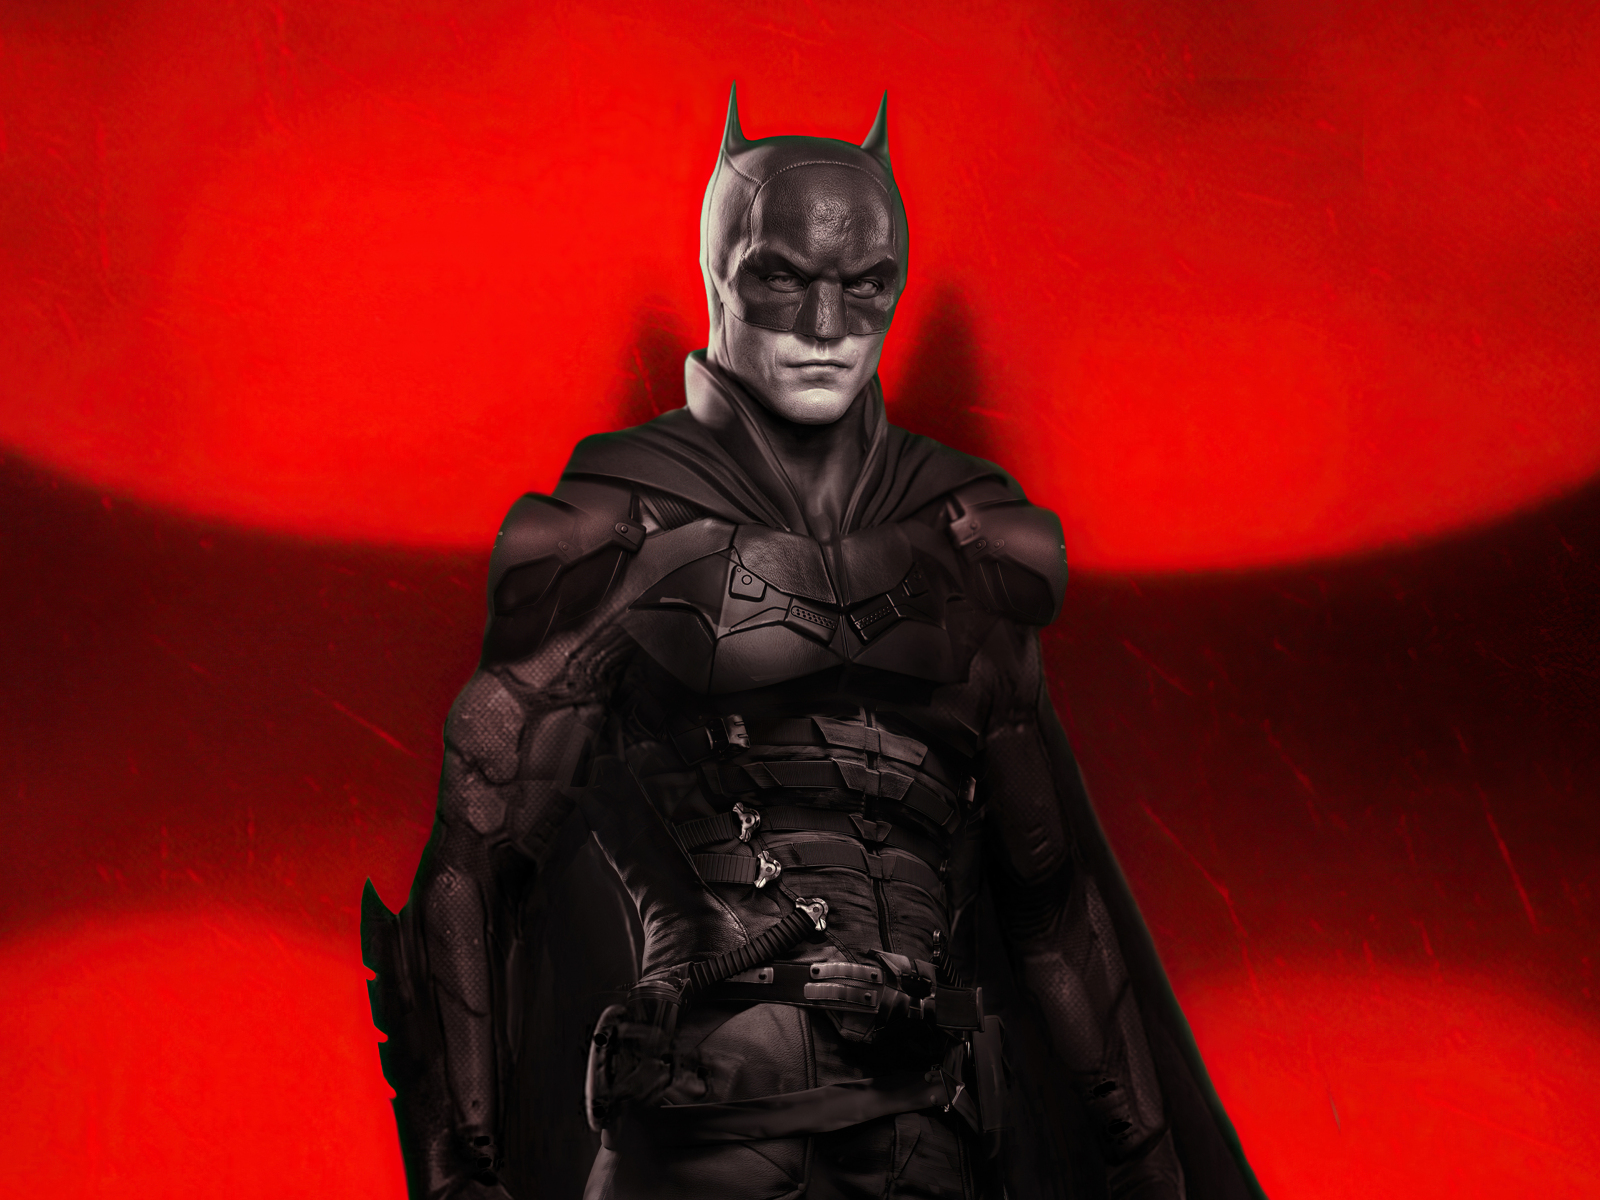 Download the batman movie, poster, 2022 movie 1600x1200 wallpaper, standard 4:3 fullscreen 1600x1200 HD image, background, 27866